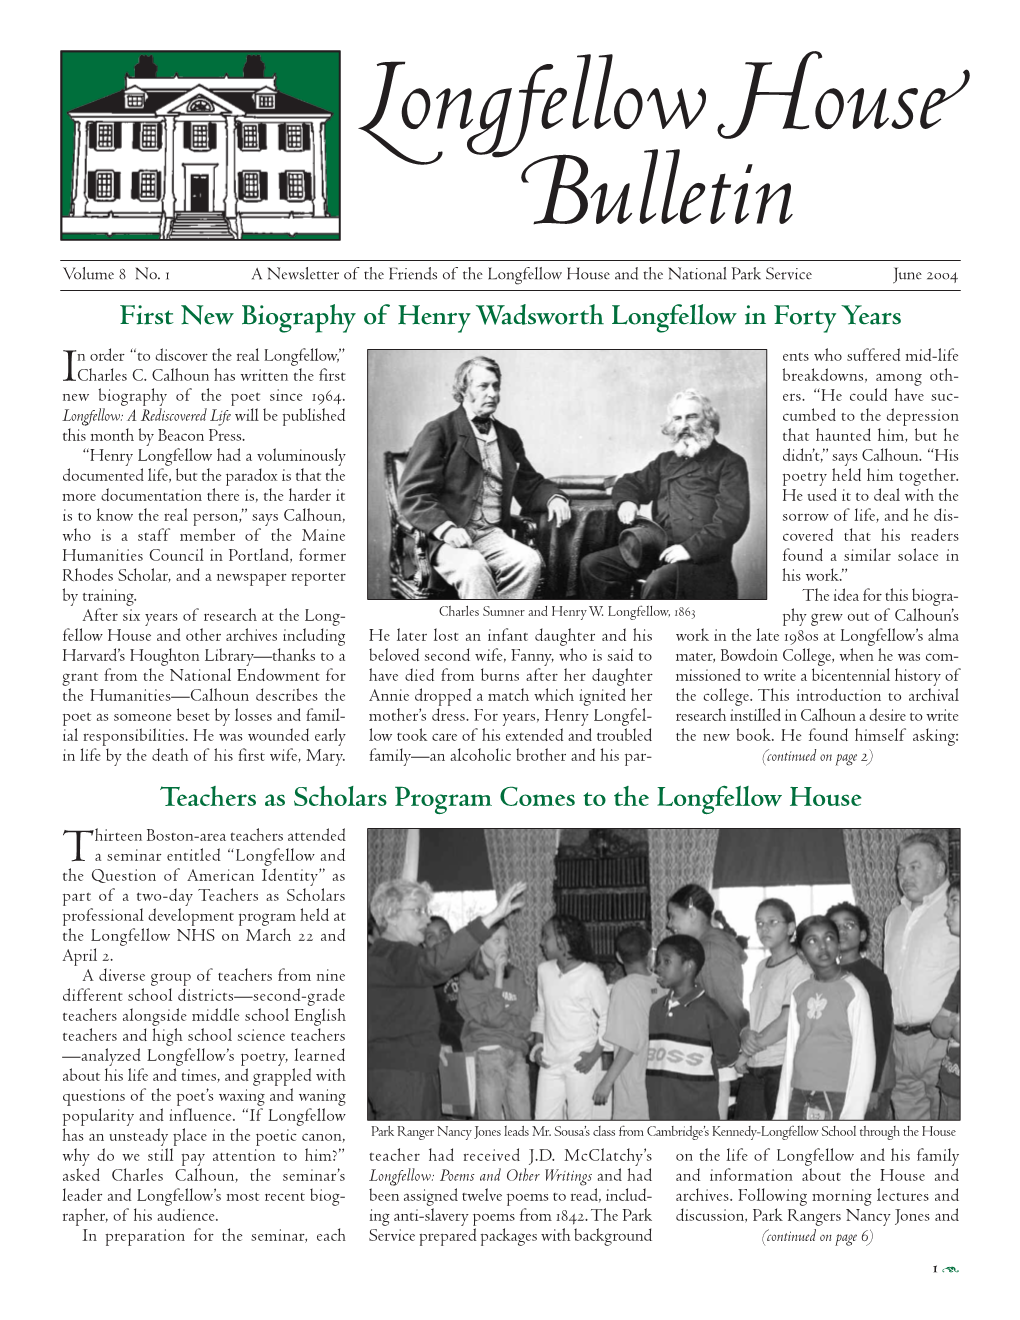 Longfellow House Bulletin, Vol. 8, No. 1